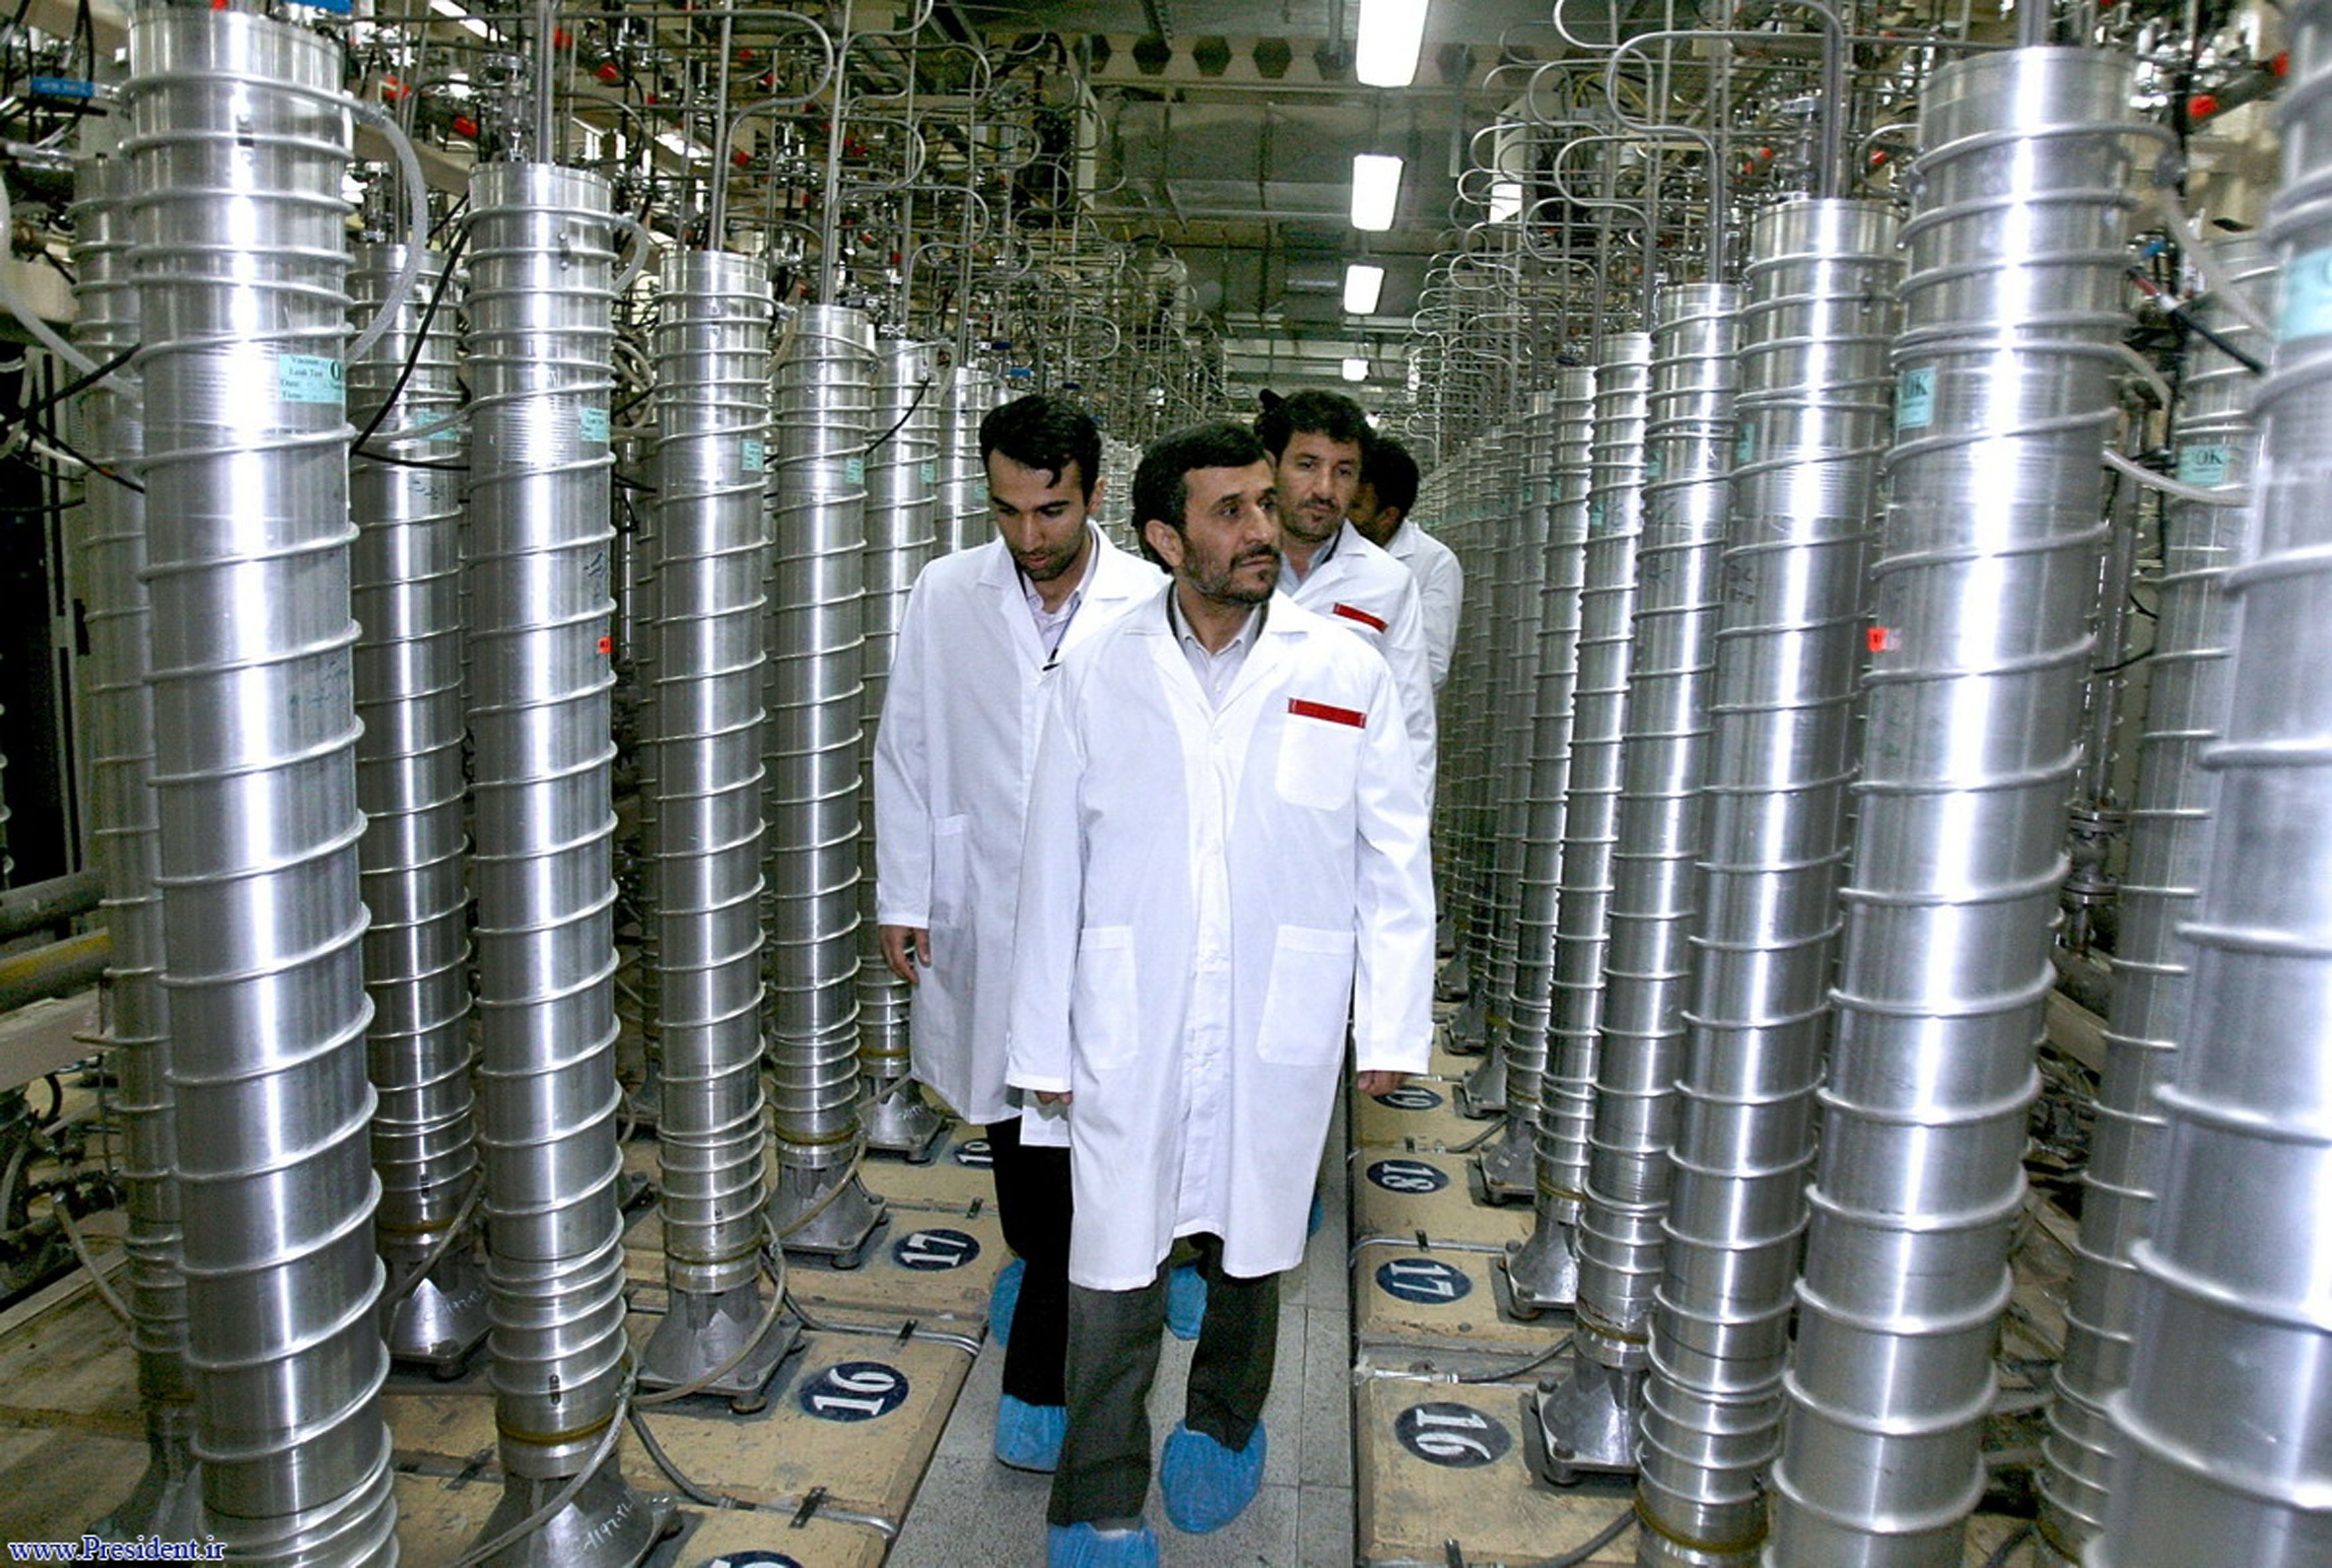 Iran, Mahmoud Ahmadinejad, Forskning, Uran, Kärnkraft, Atombomb